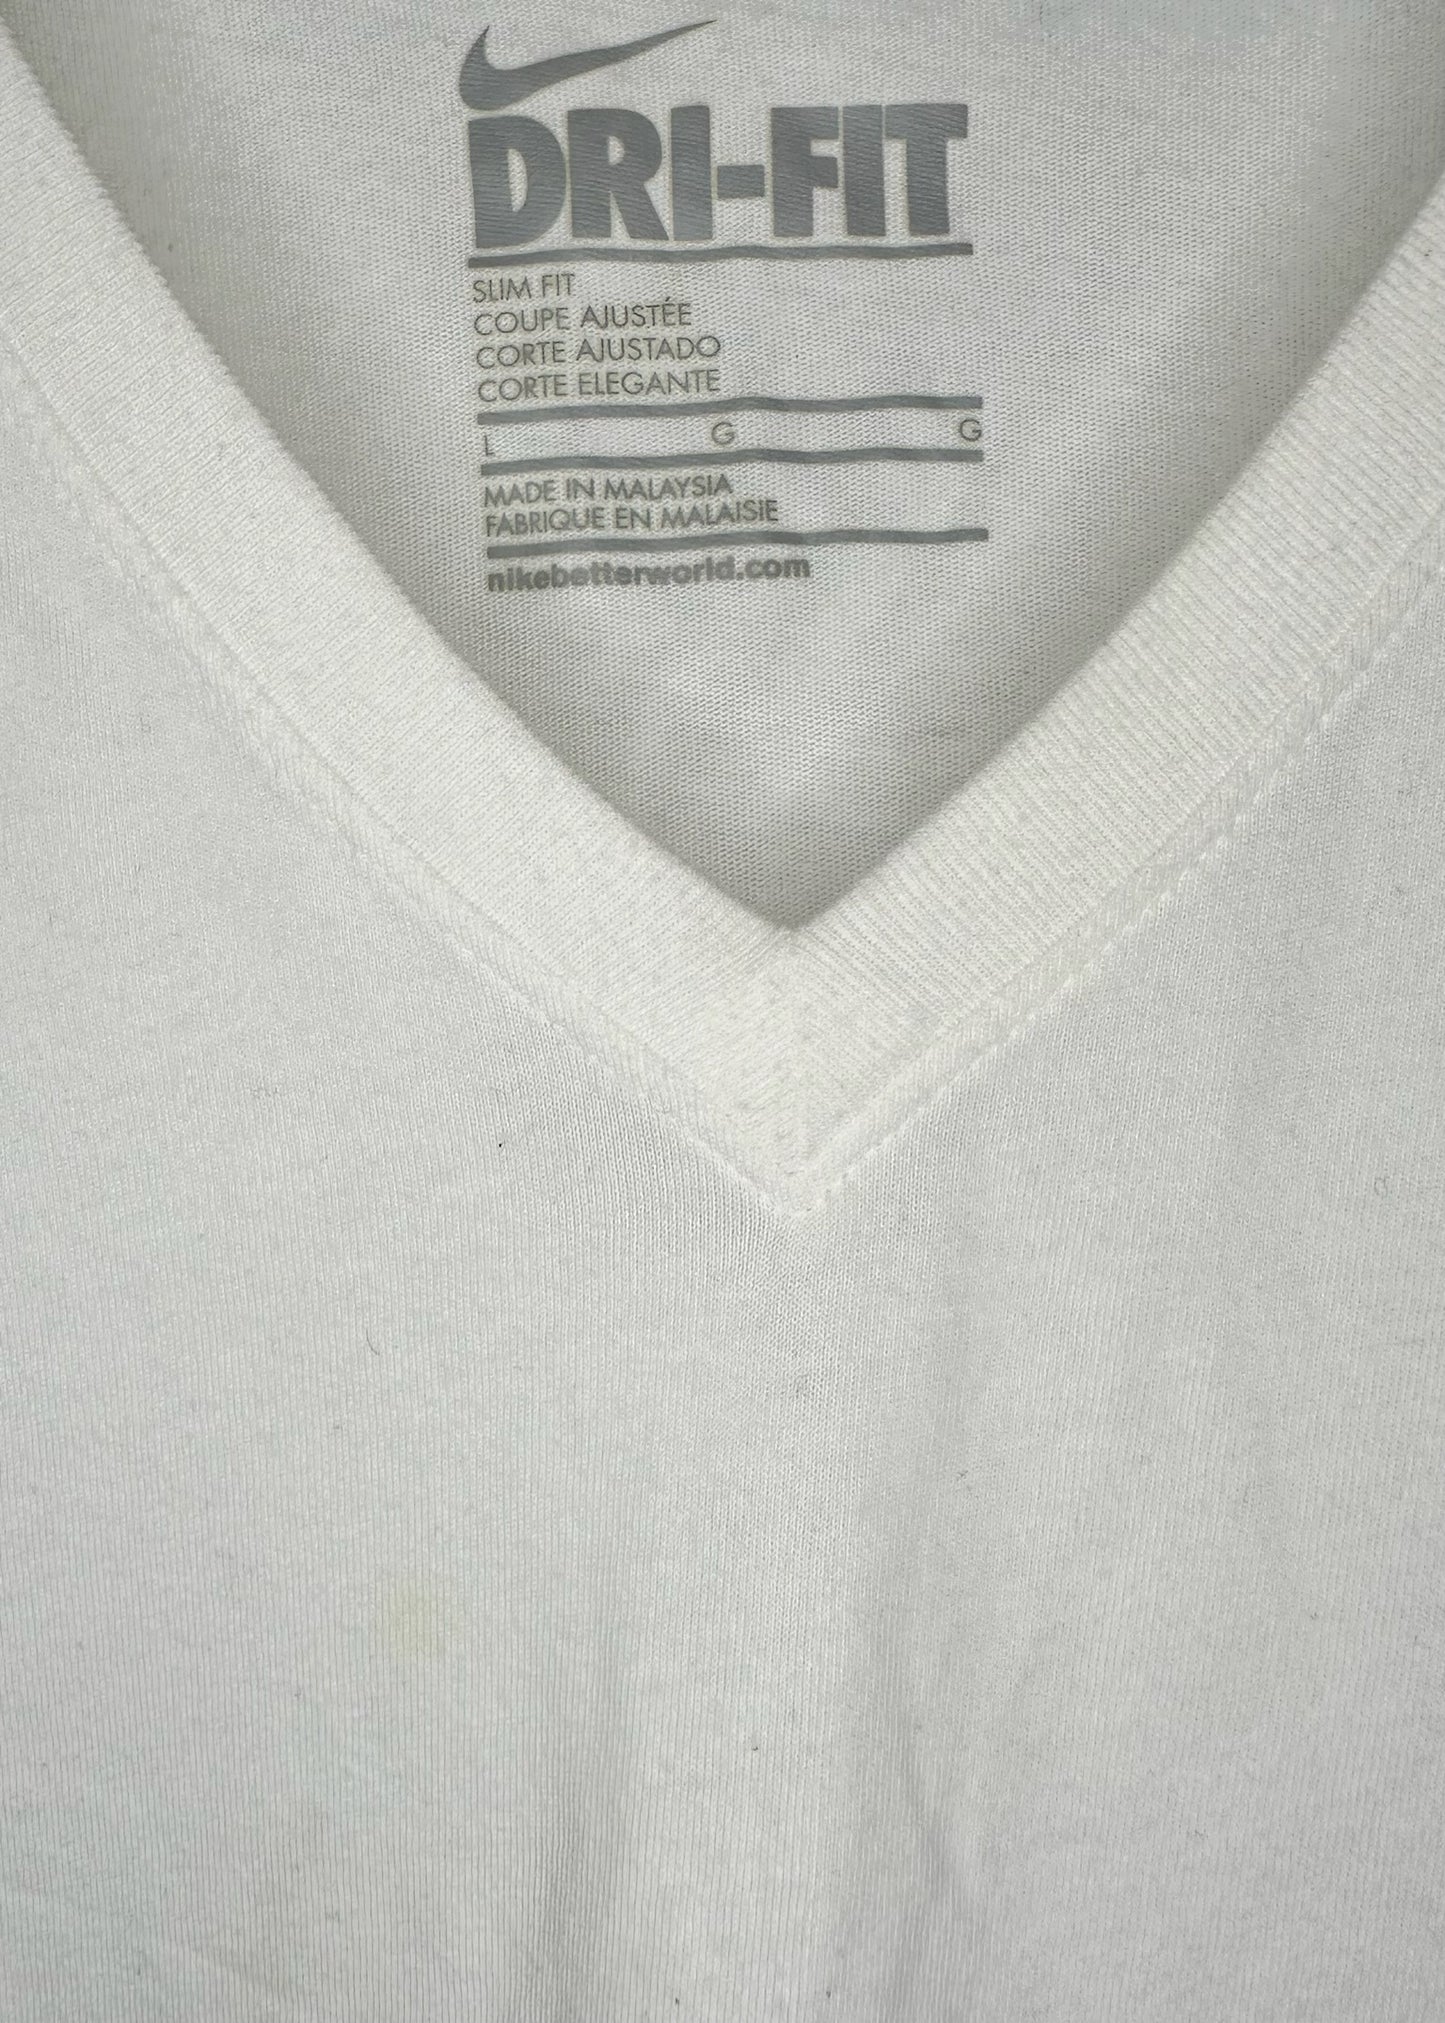 White Dri-Fit Shirt By Nike